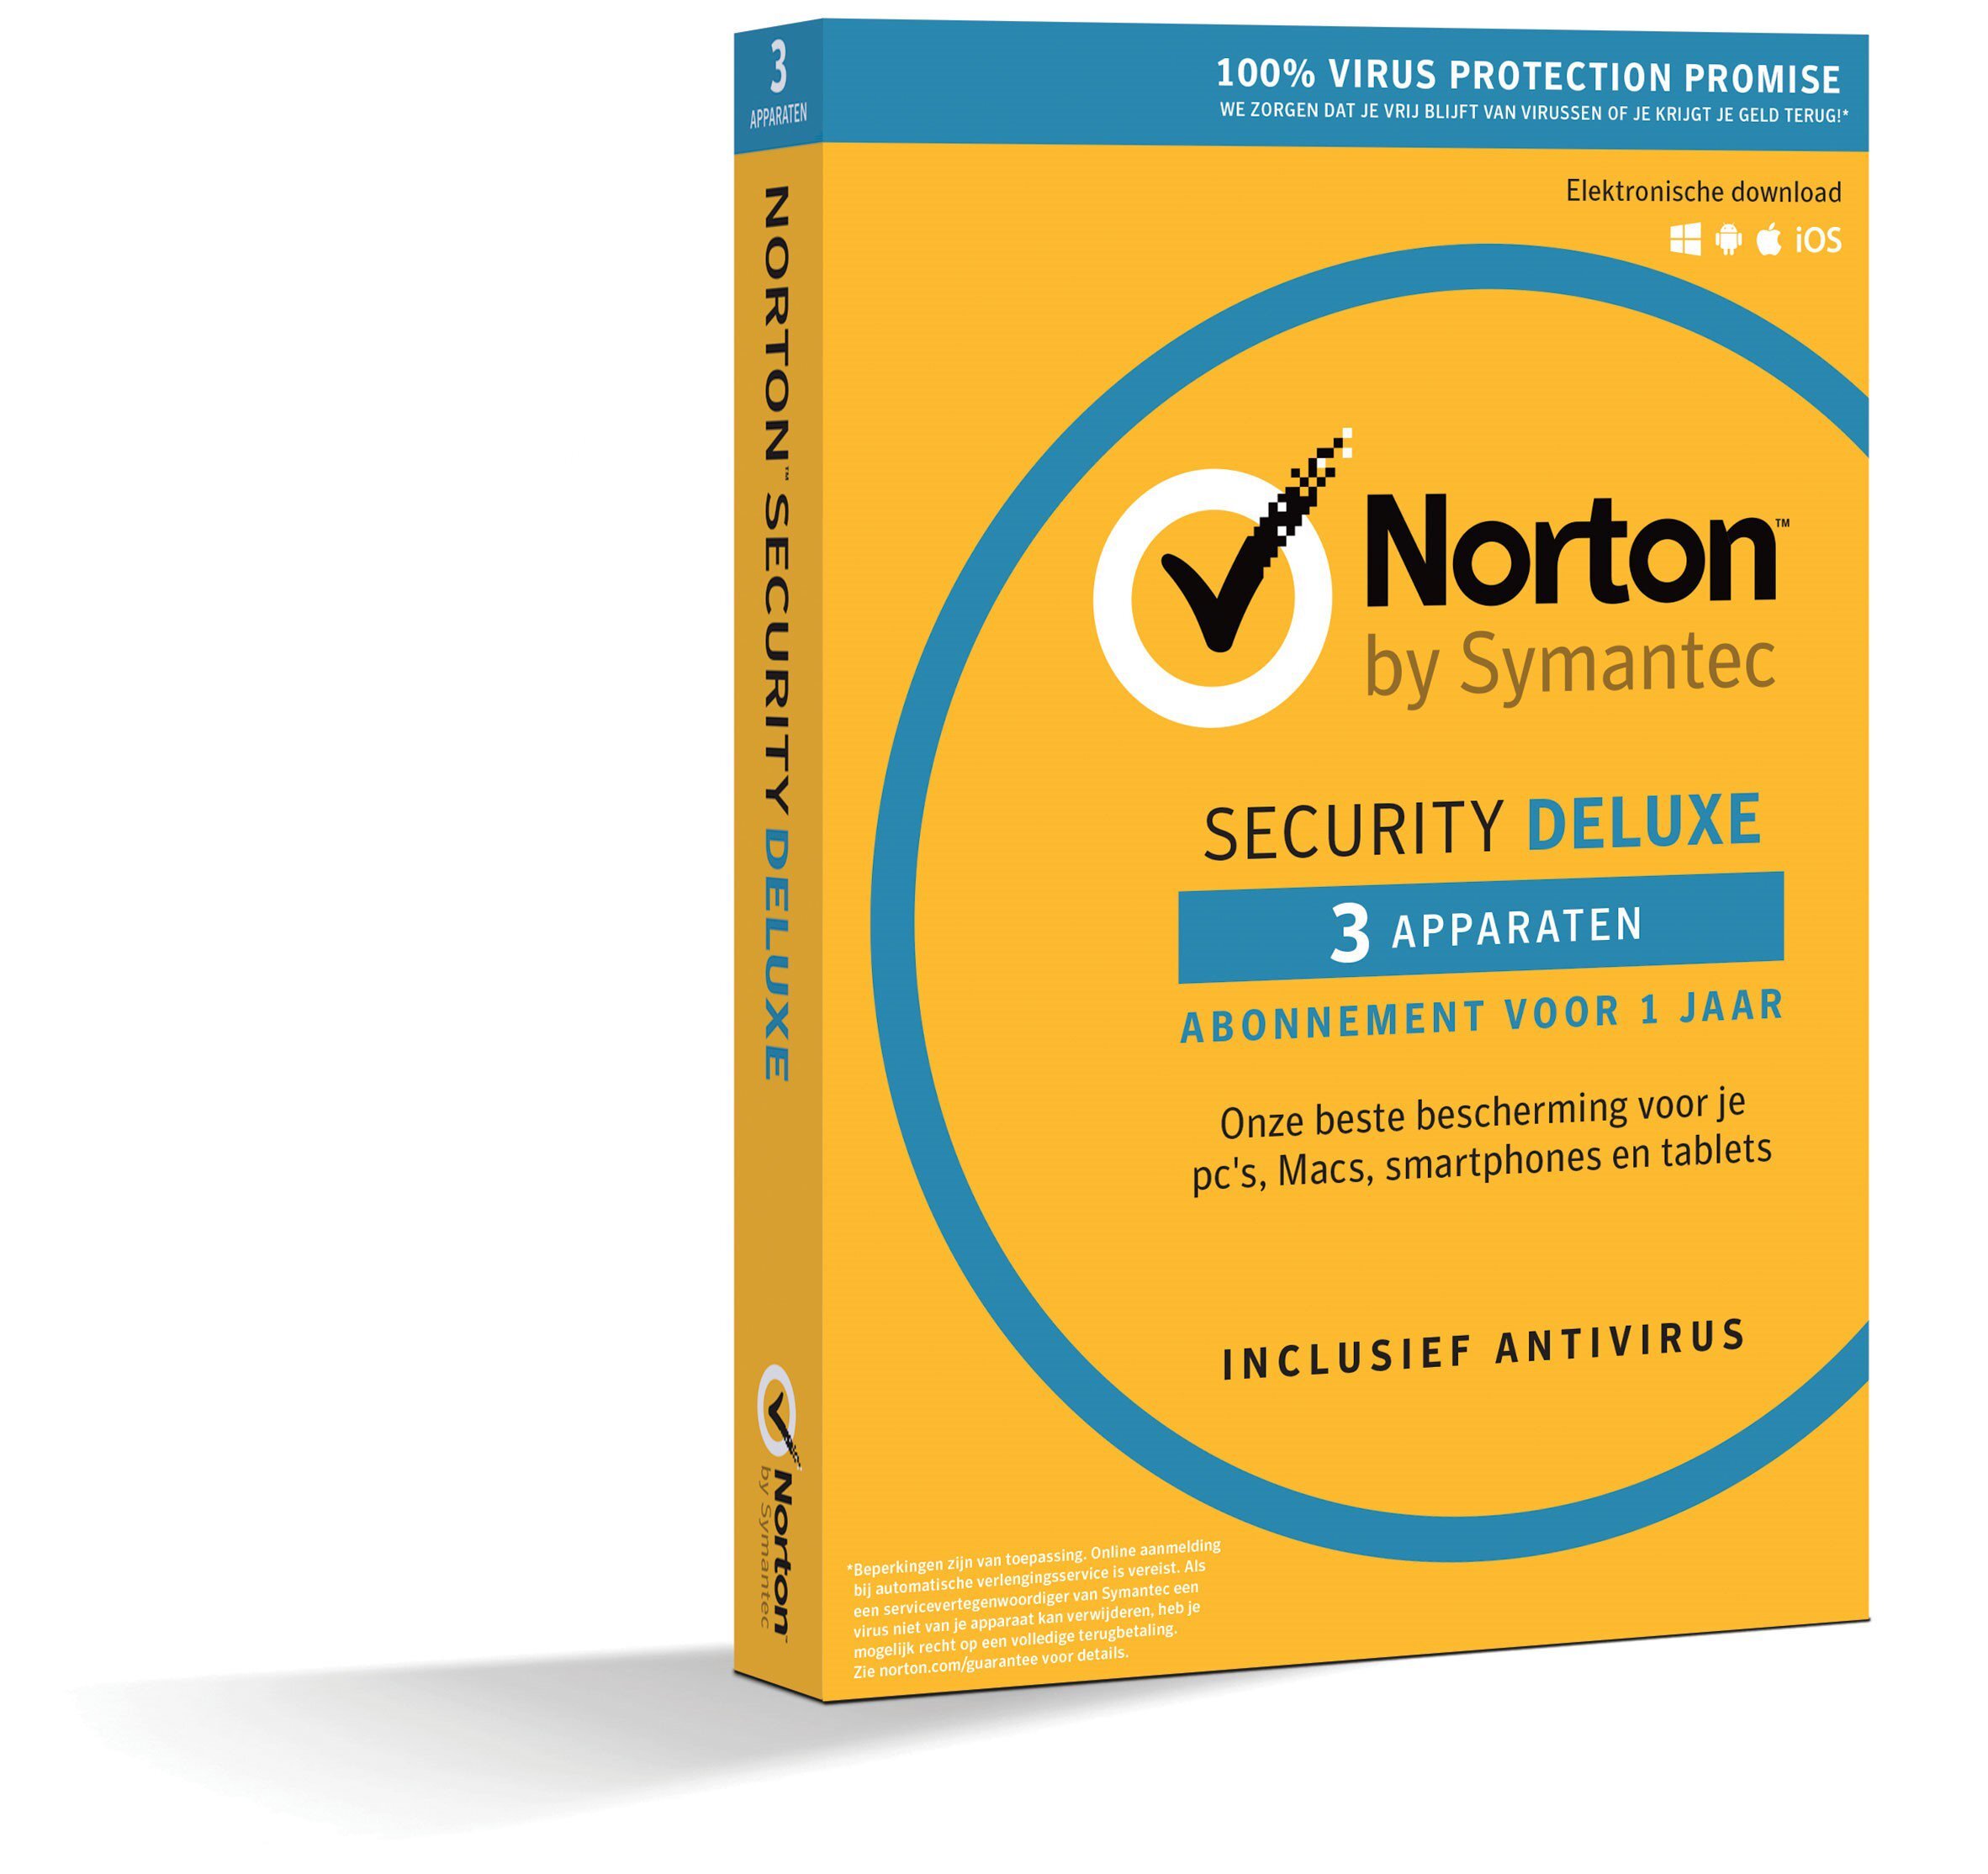 Symantec Security Deluxe 3-Apparaten 1jaar 2020 - Antivirus inbegrepen - Windows | Mac | Android | iOS